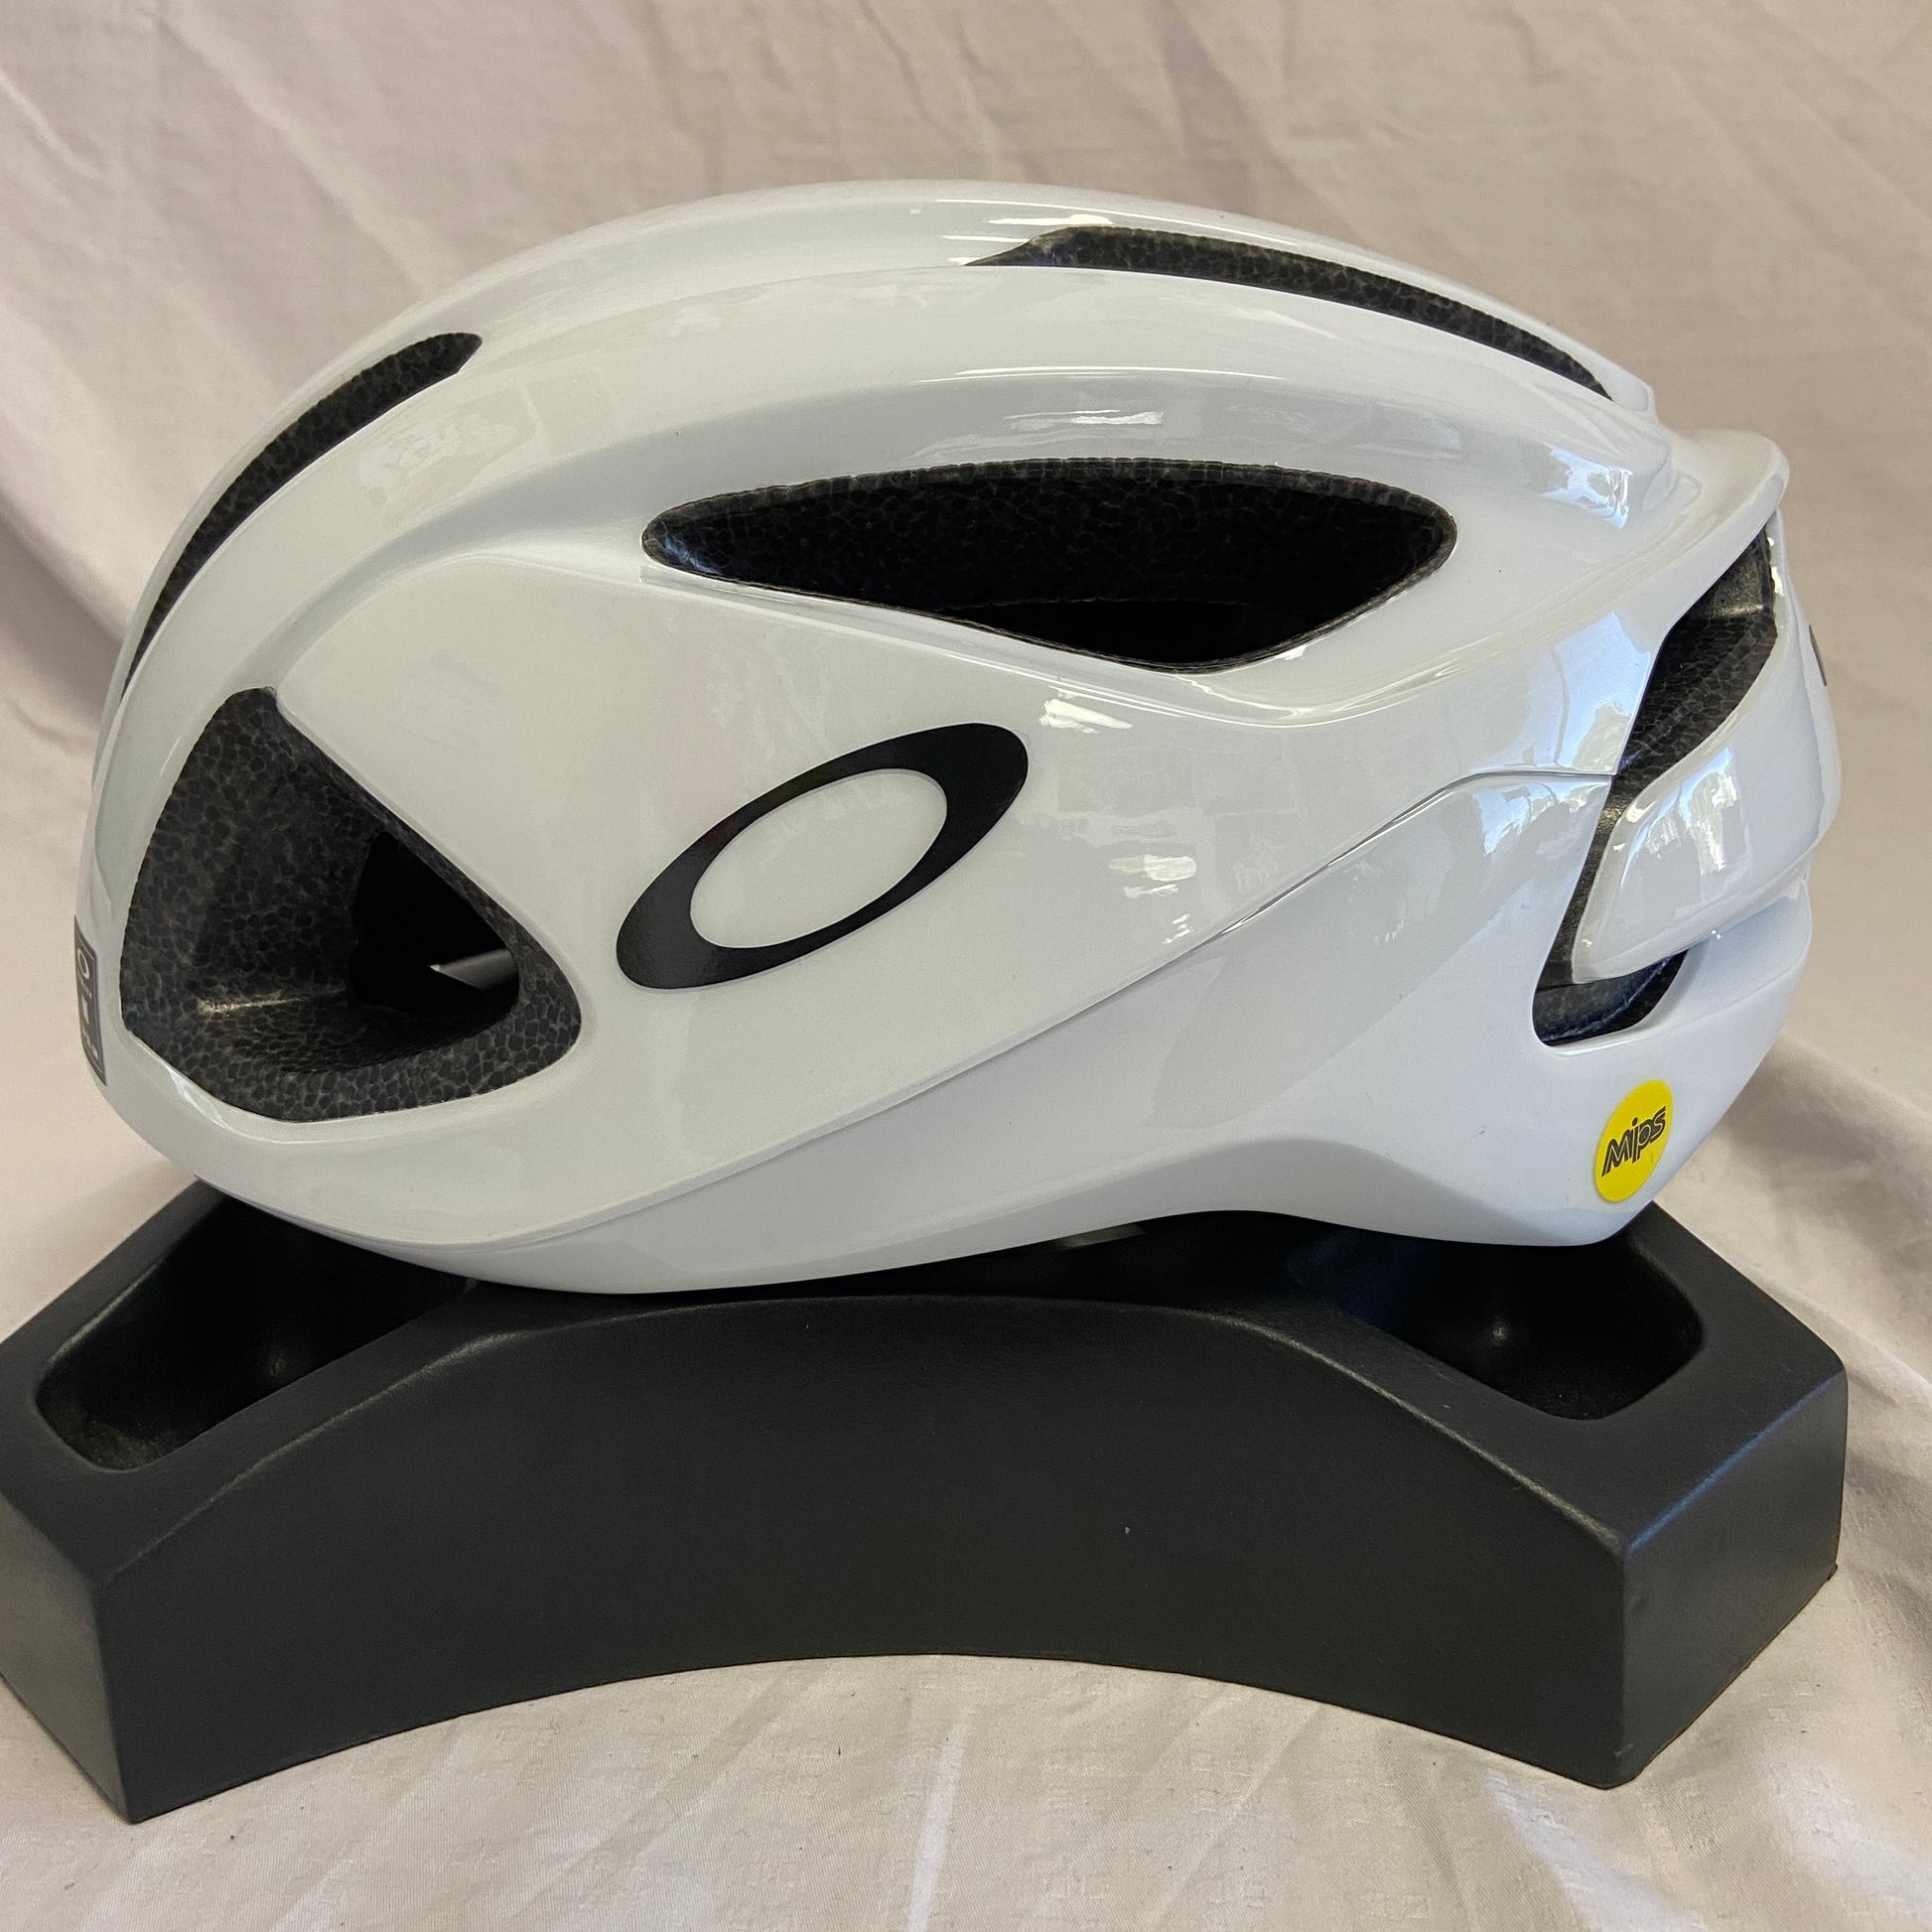 Oakley Aro 3 Cycling Helmet White Medium - ExtremeSupply.com